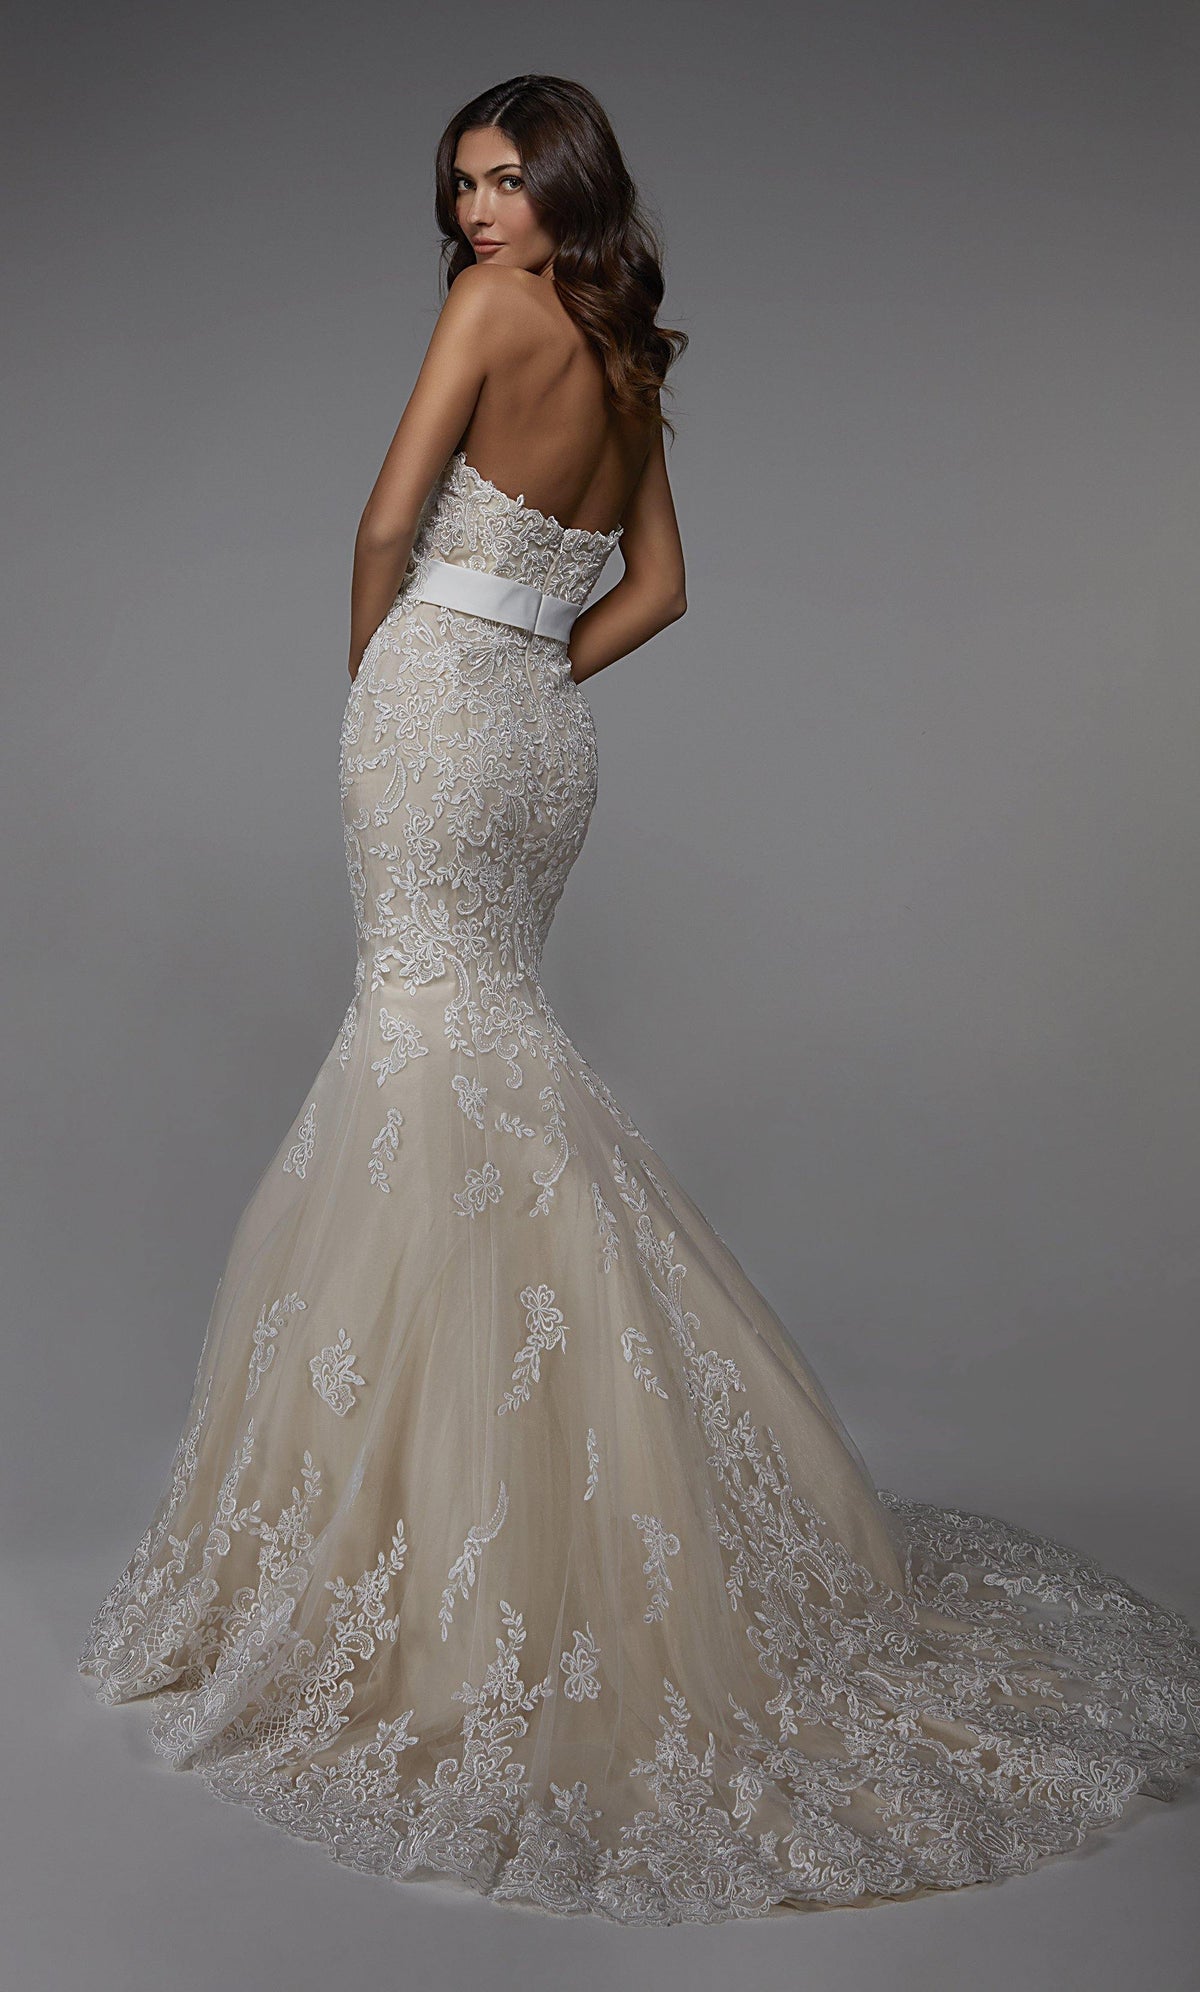 Formal Dress: 7032. Long Wedding Dress, Strapless, Mermaid Alyce Paris